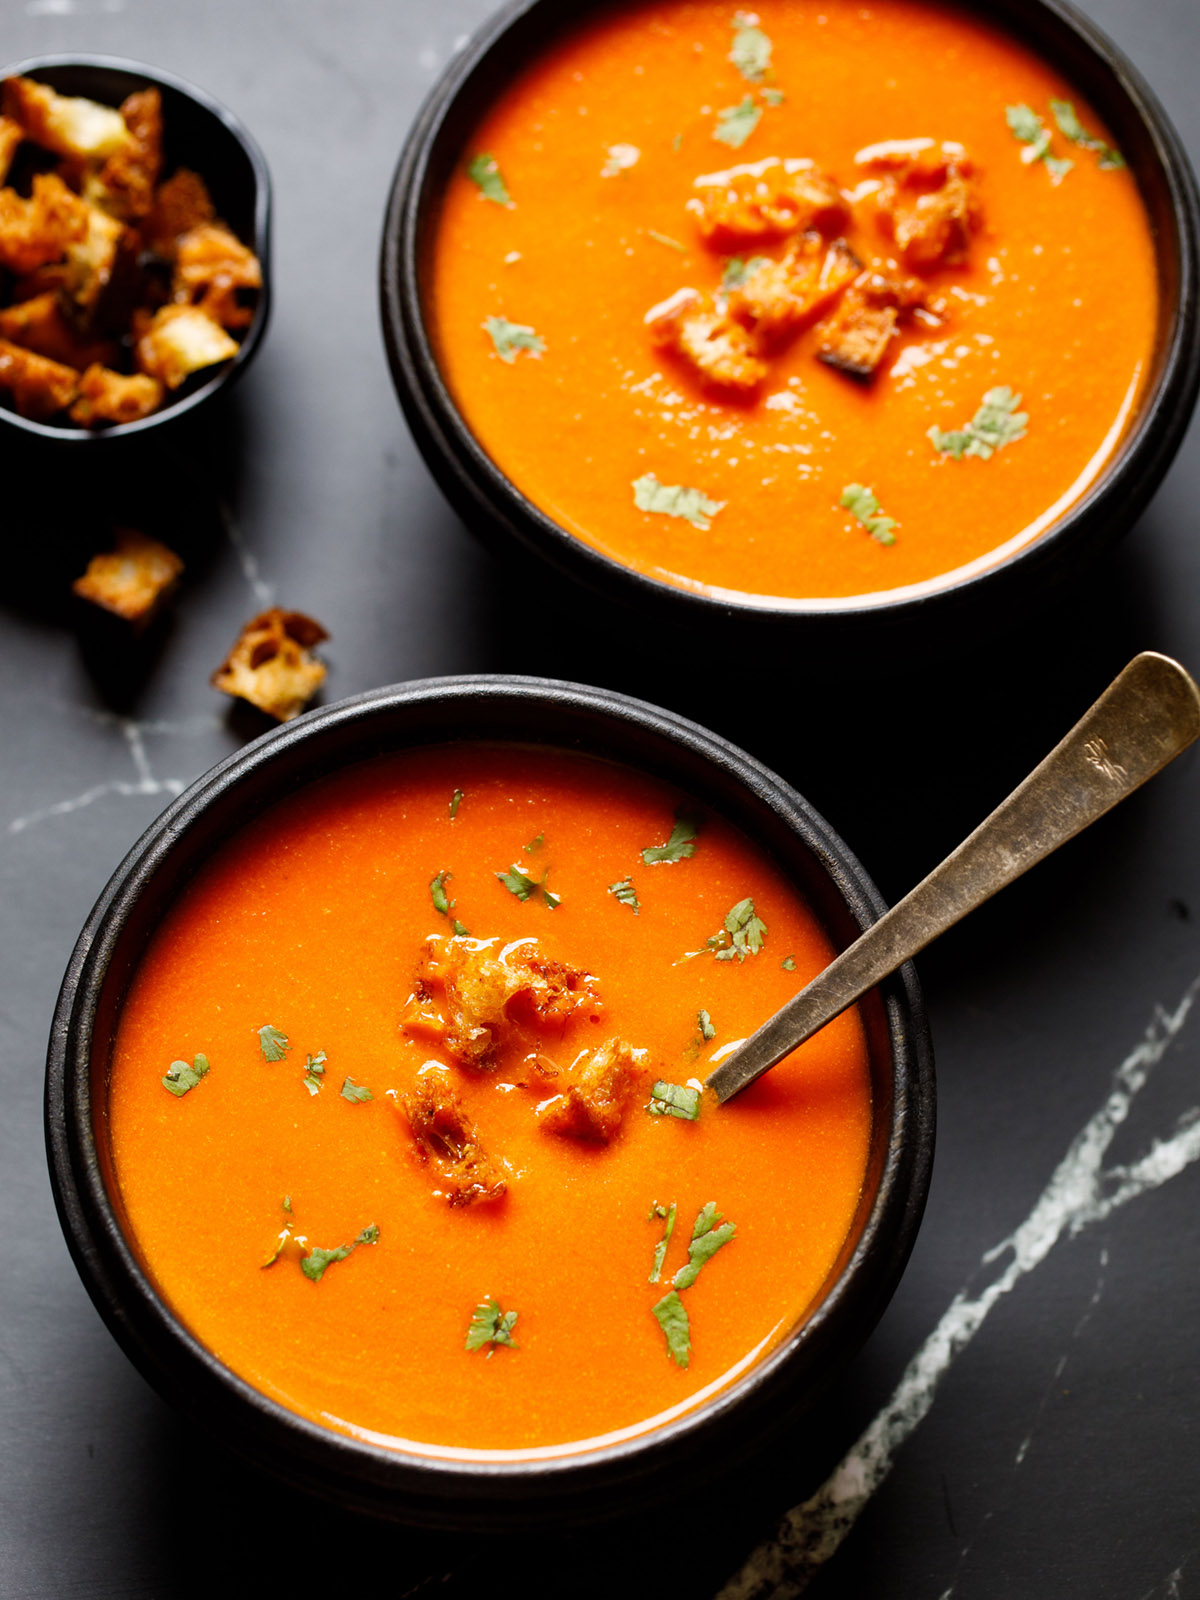 https://www.vegrecipesofindia.com/wp-content/uploads/2020/11/tomato-soup-recipe.jpg